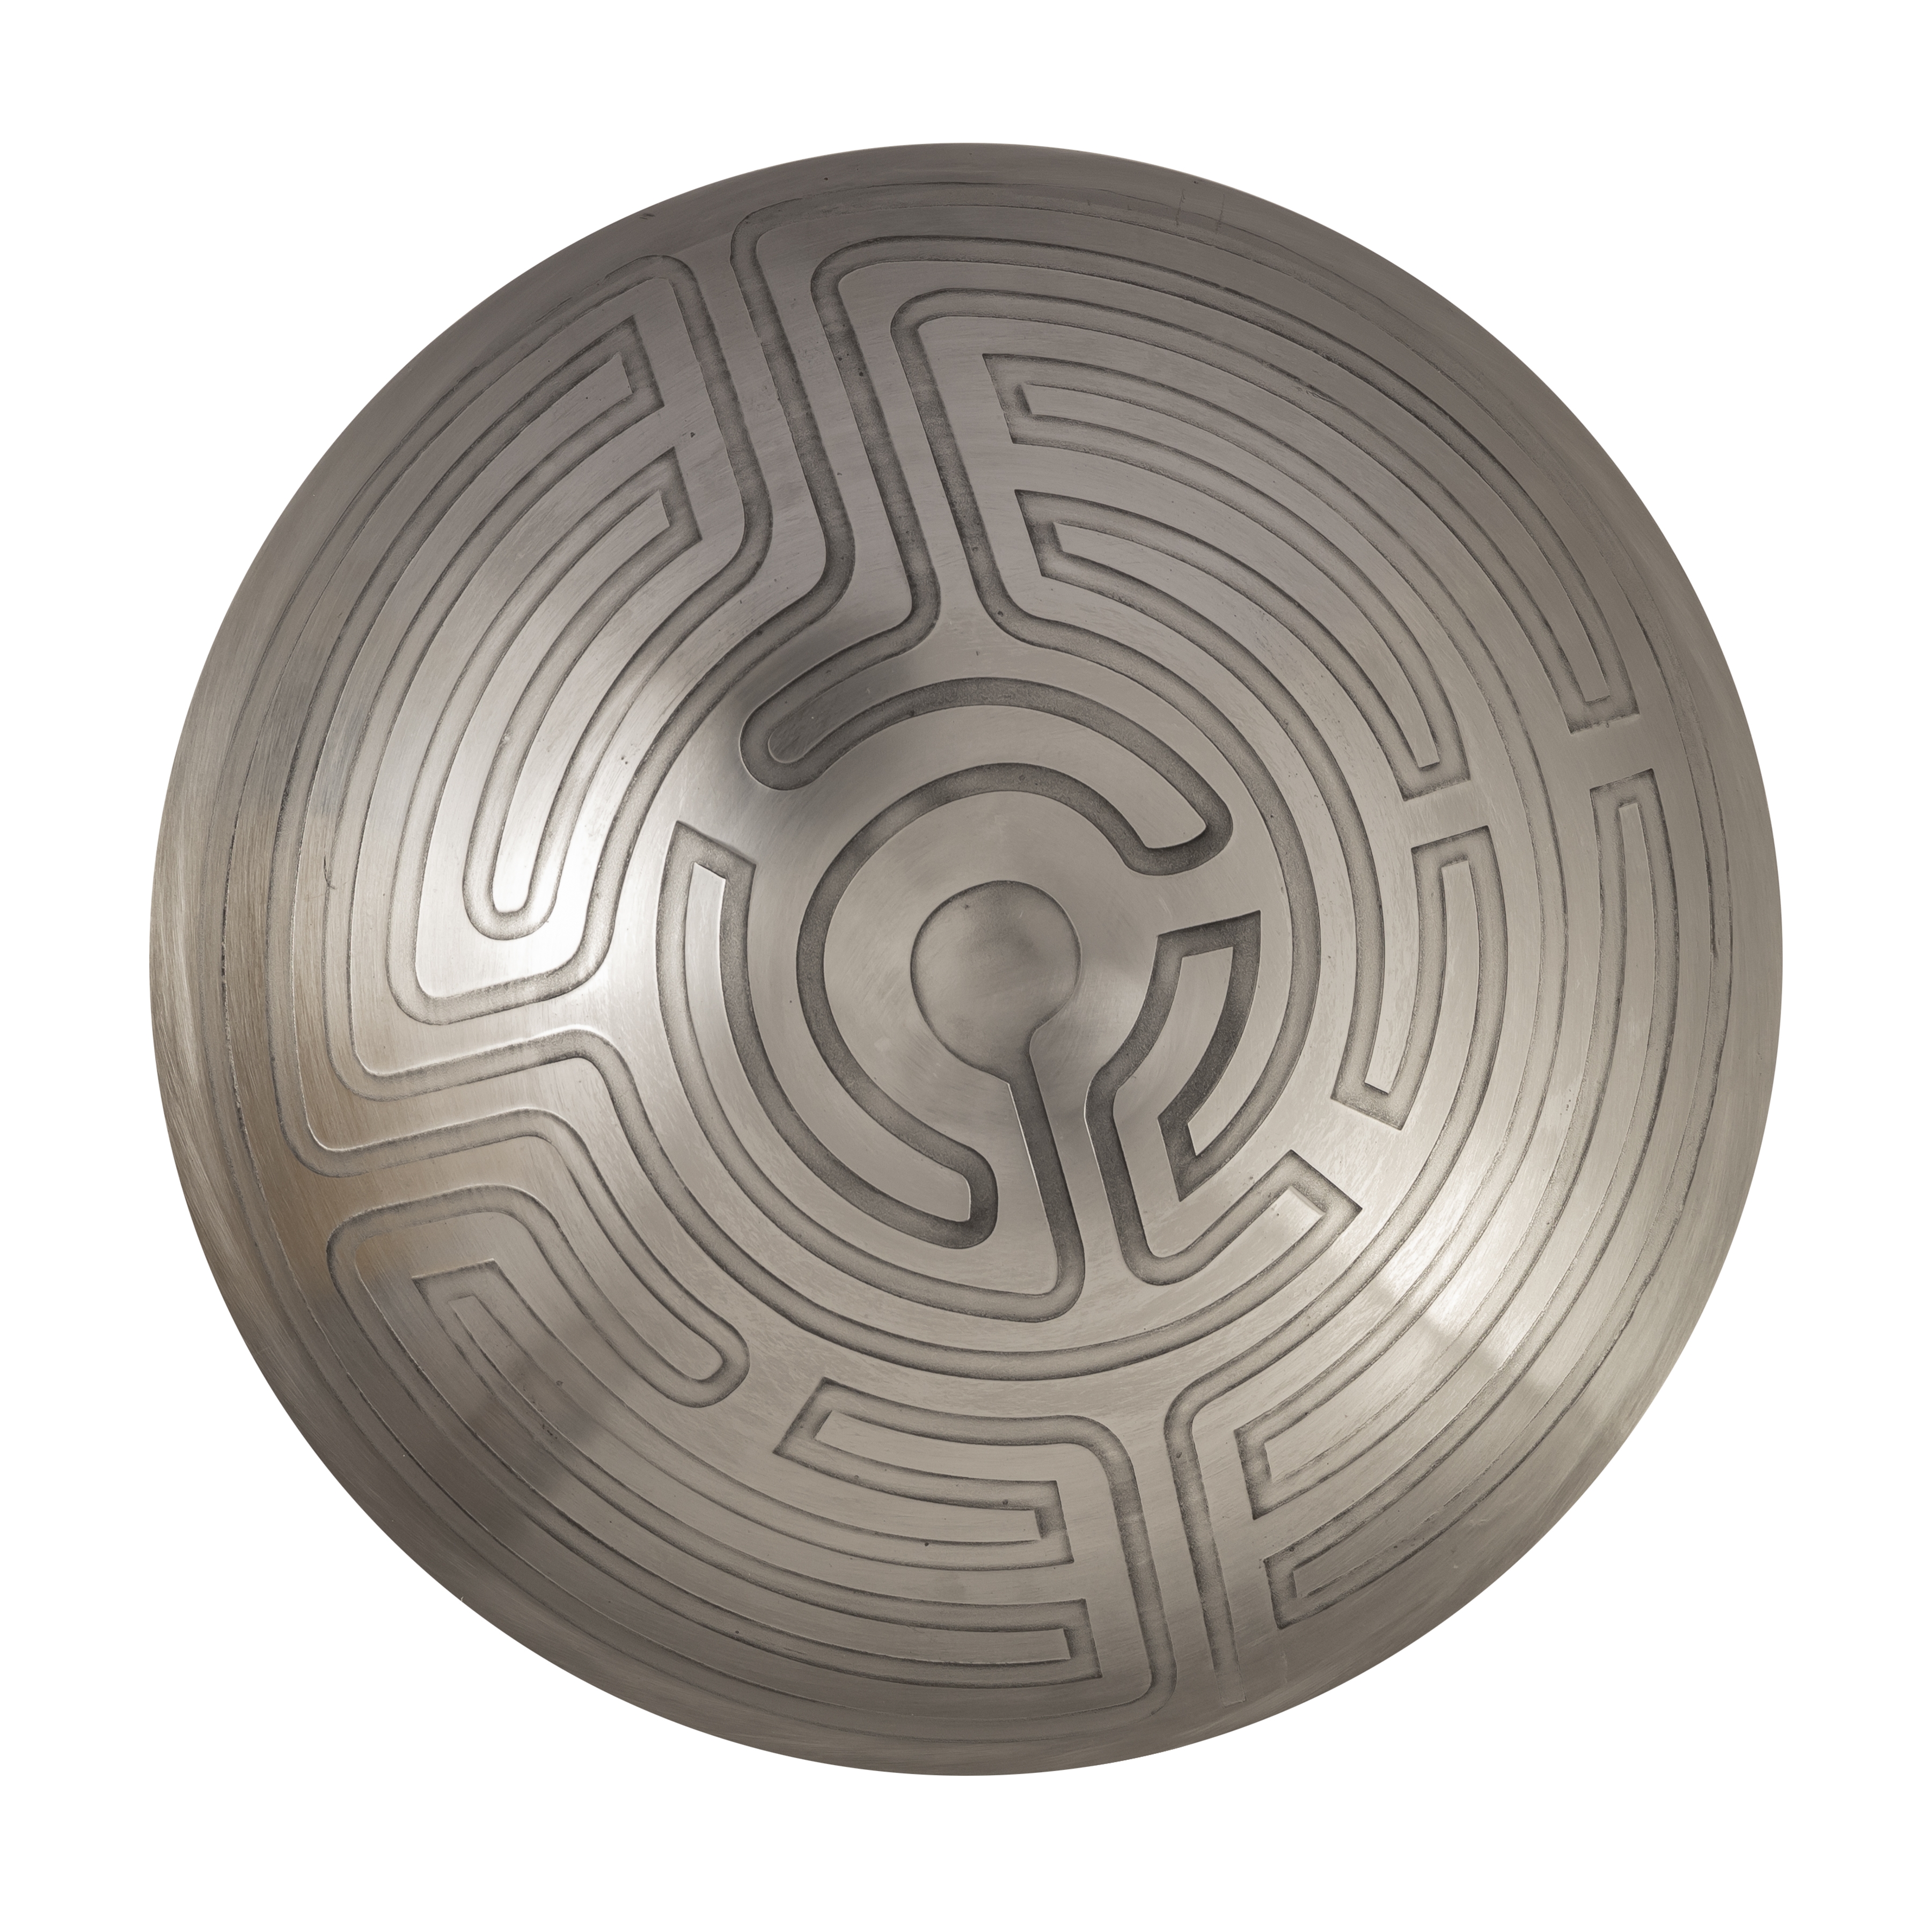 Maze Etched Centerpiece Bowl - Nickel - Image 3